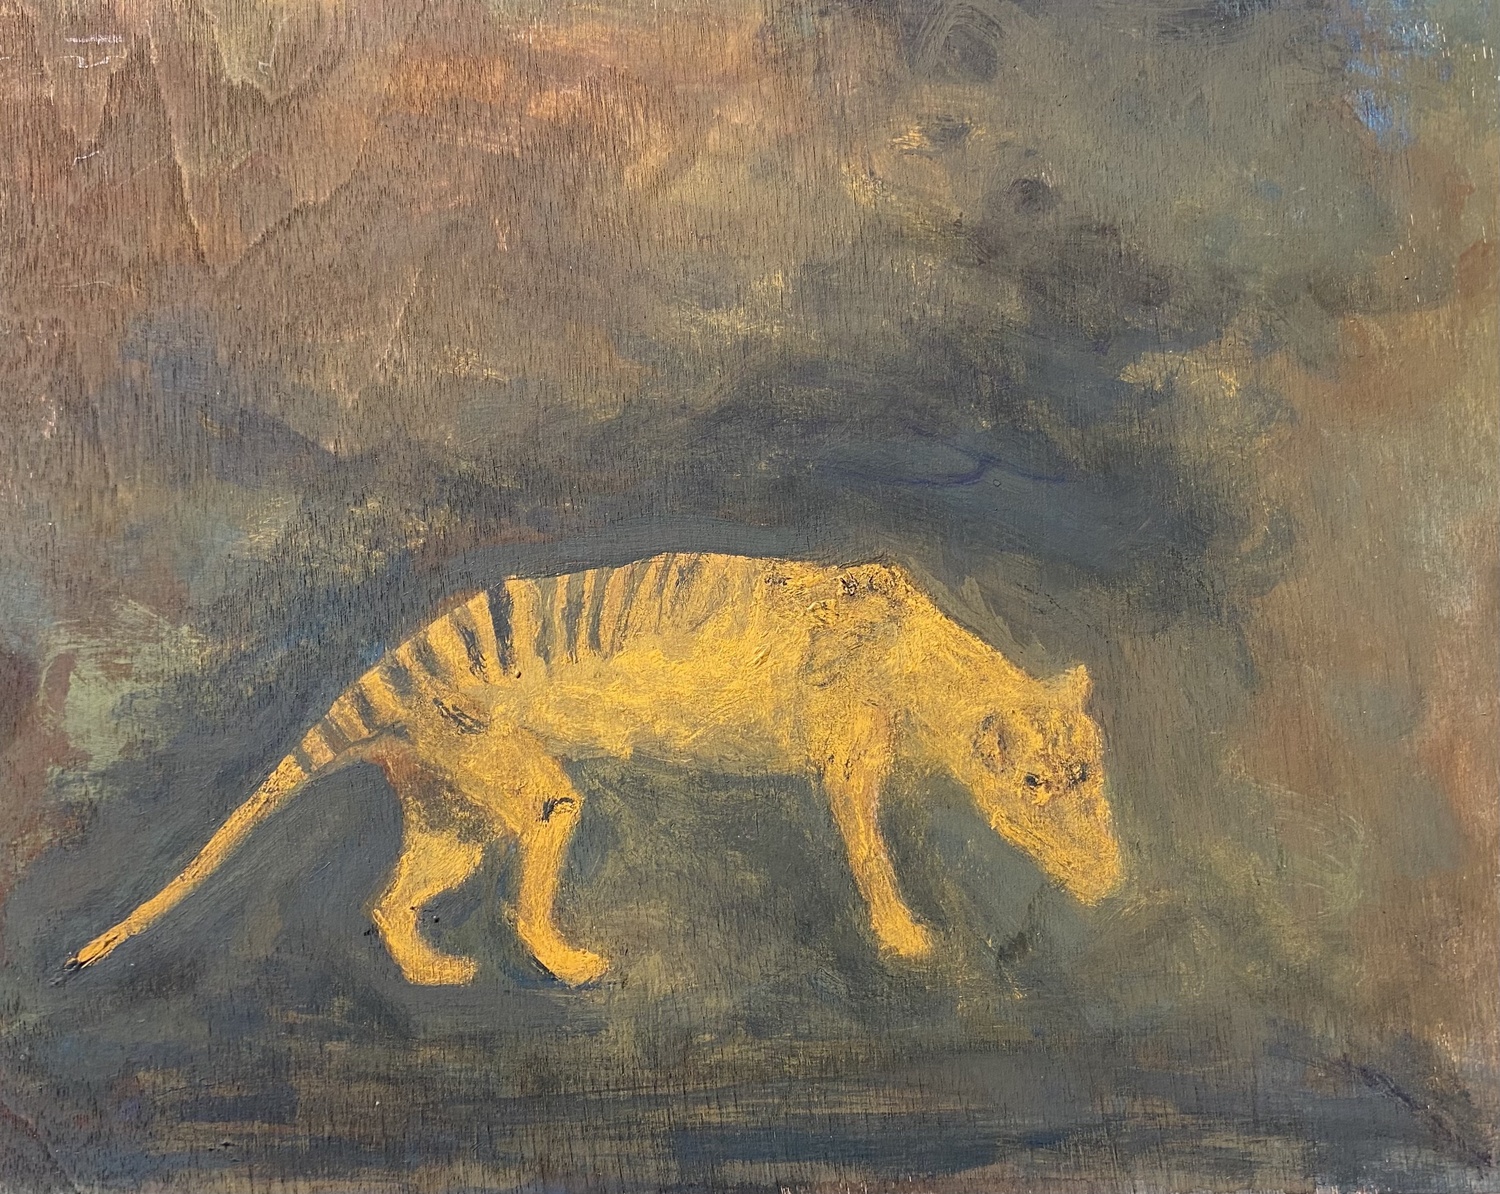 Thylacine study